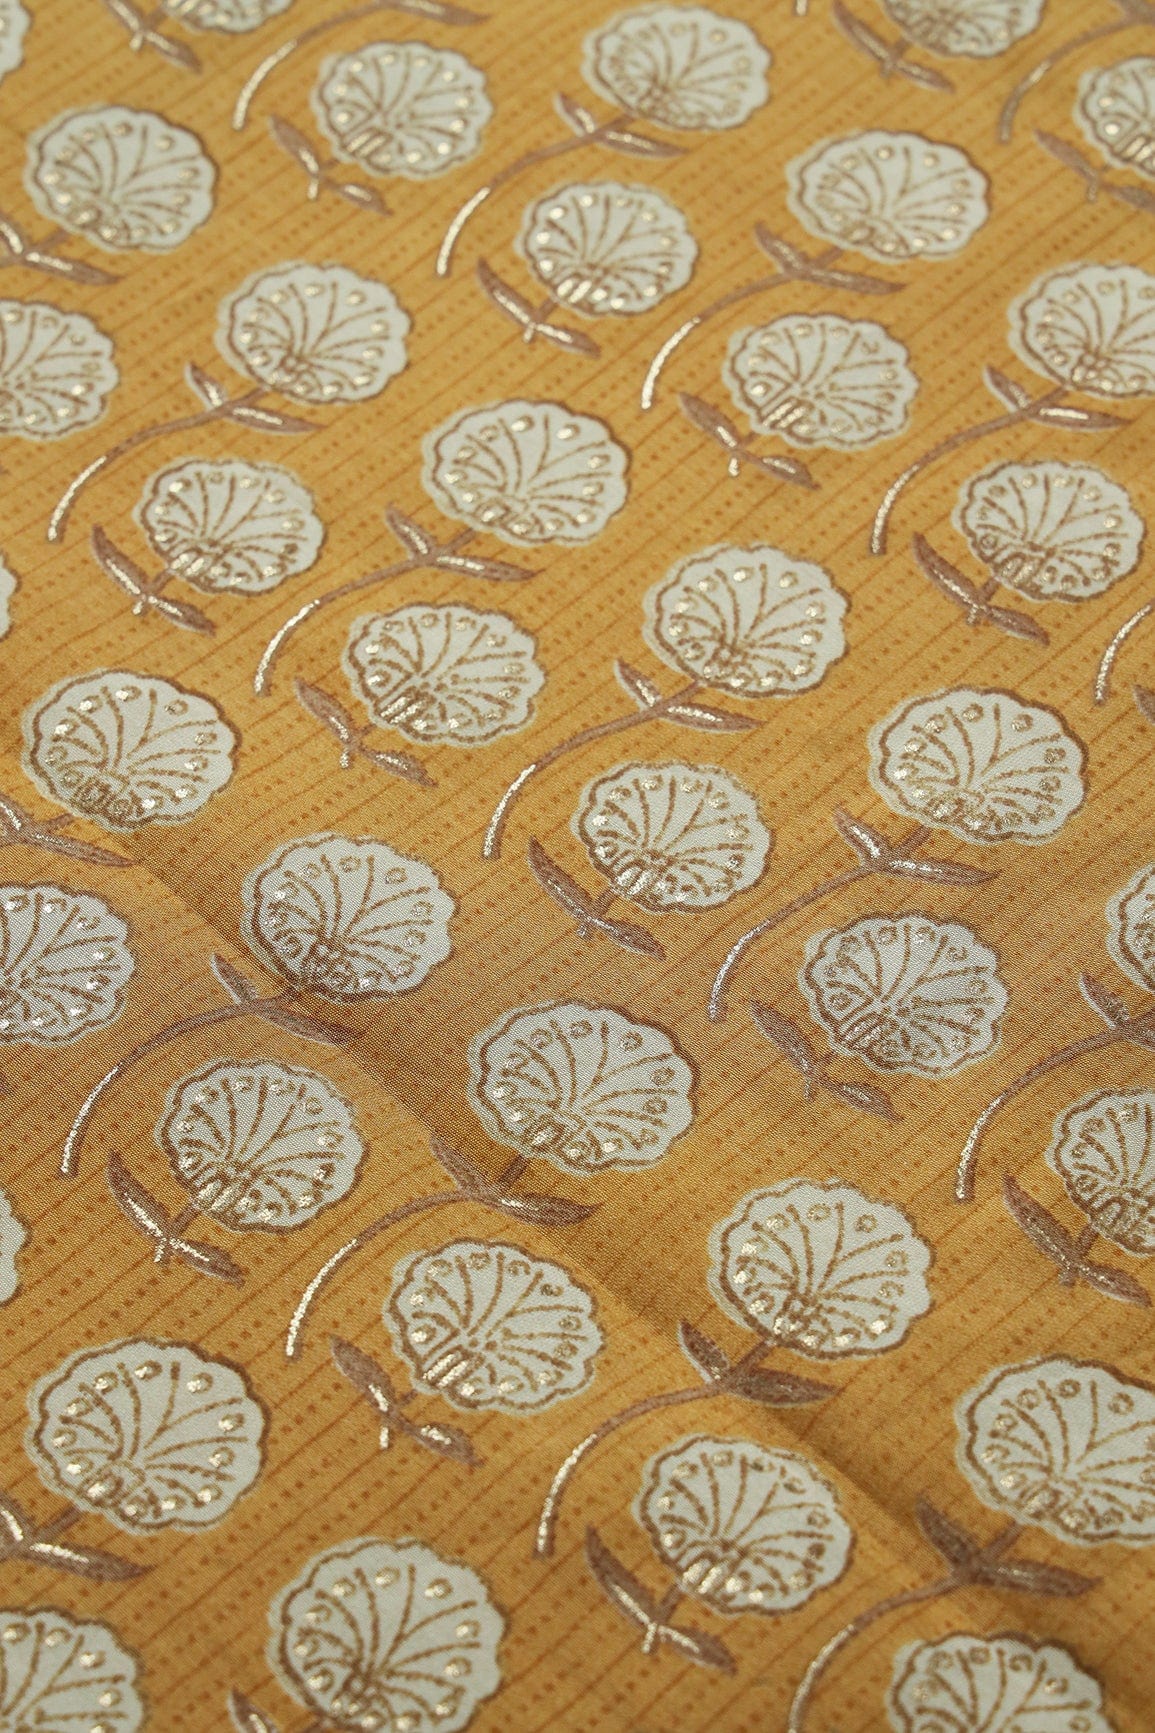 doeraa Prints Mustard Yellow And Cream Floral Foil Print On Pure Chanderi Silk Fabric